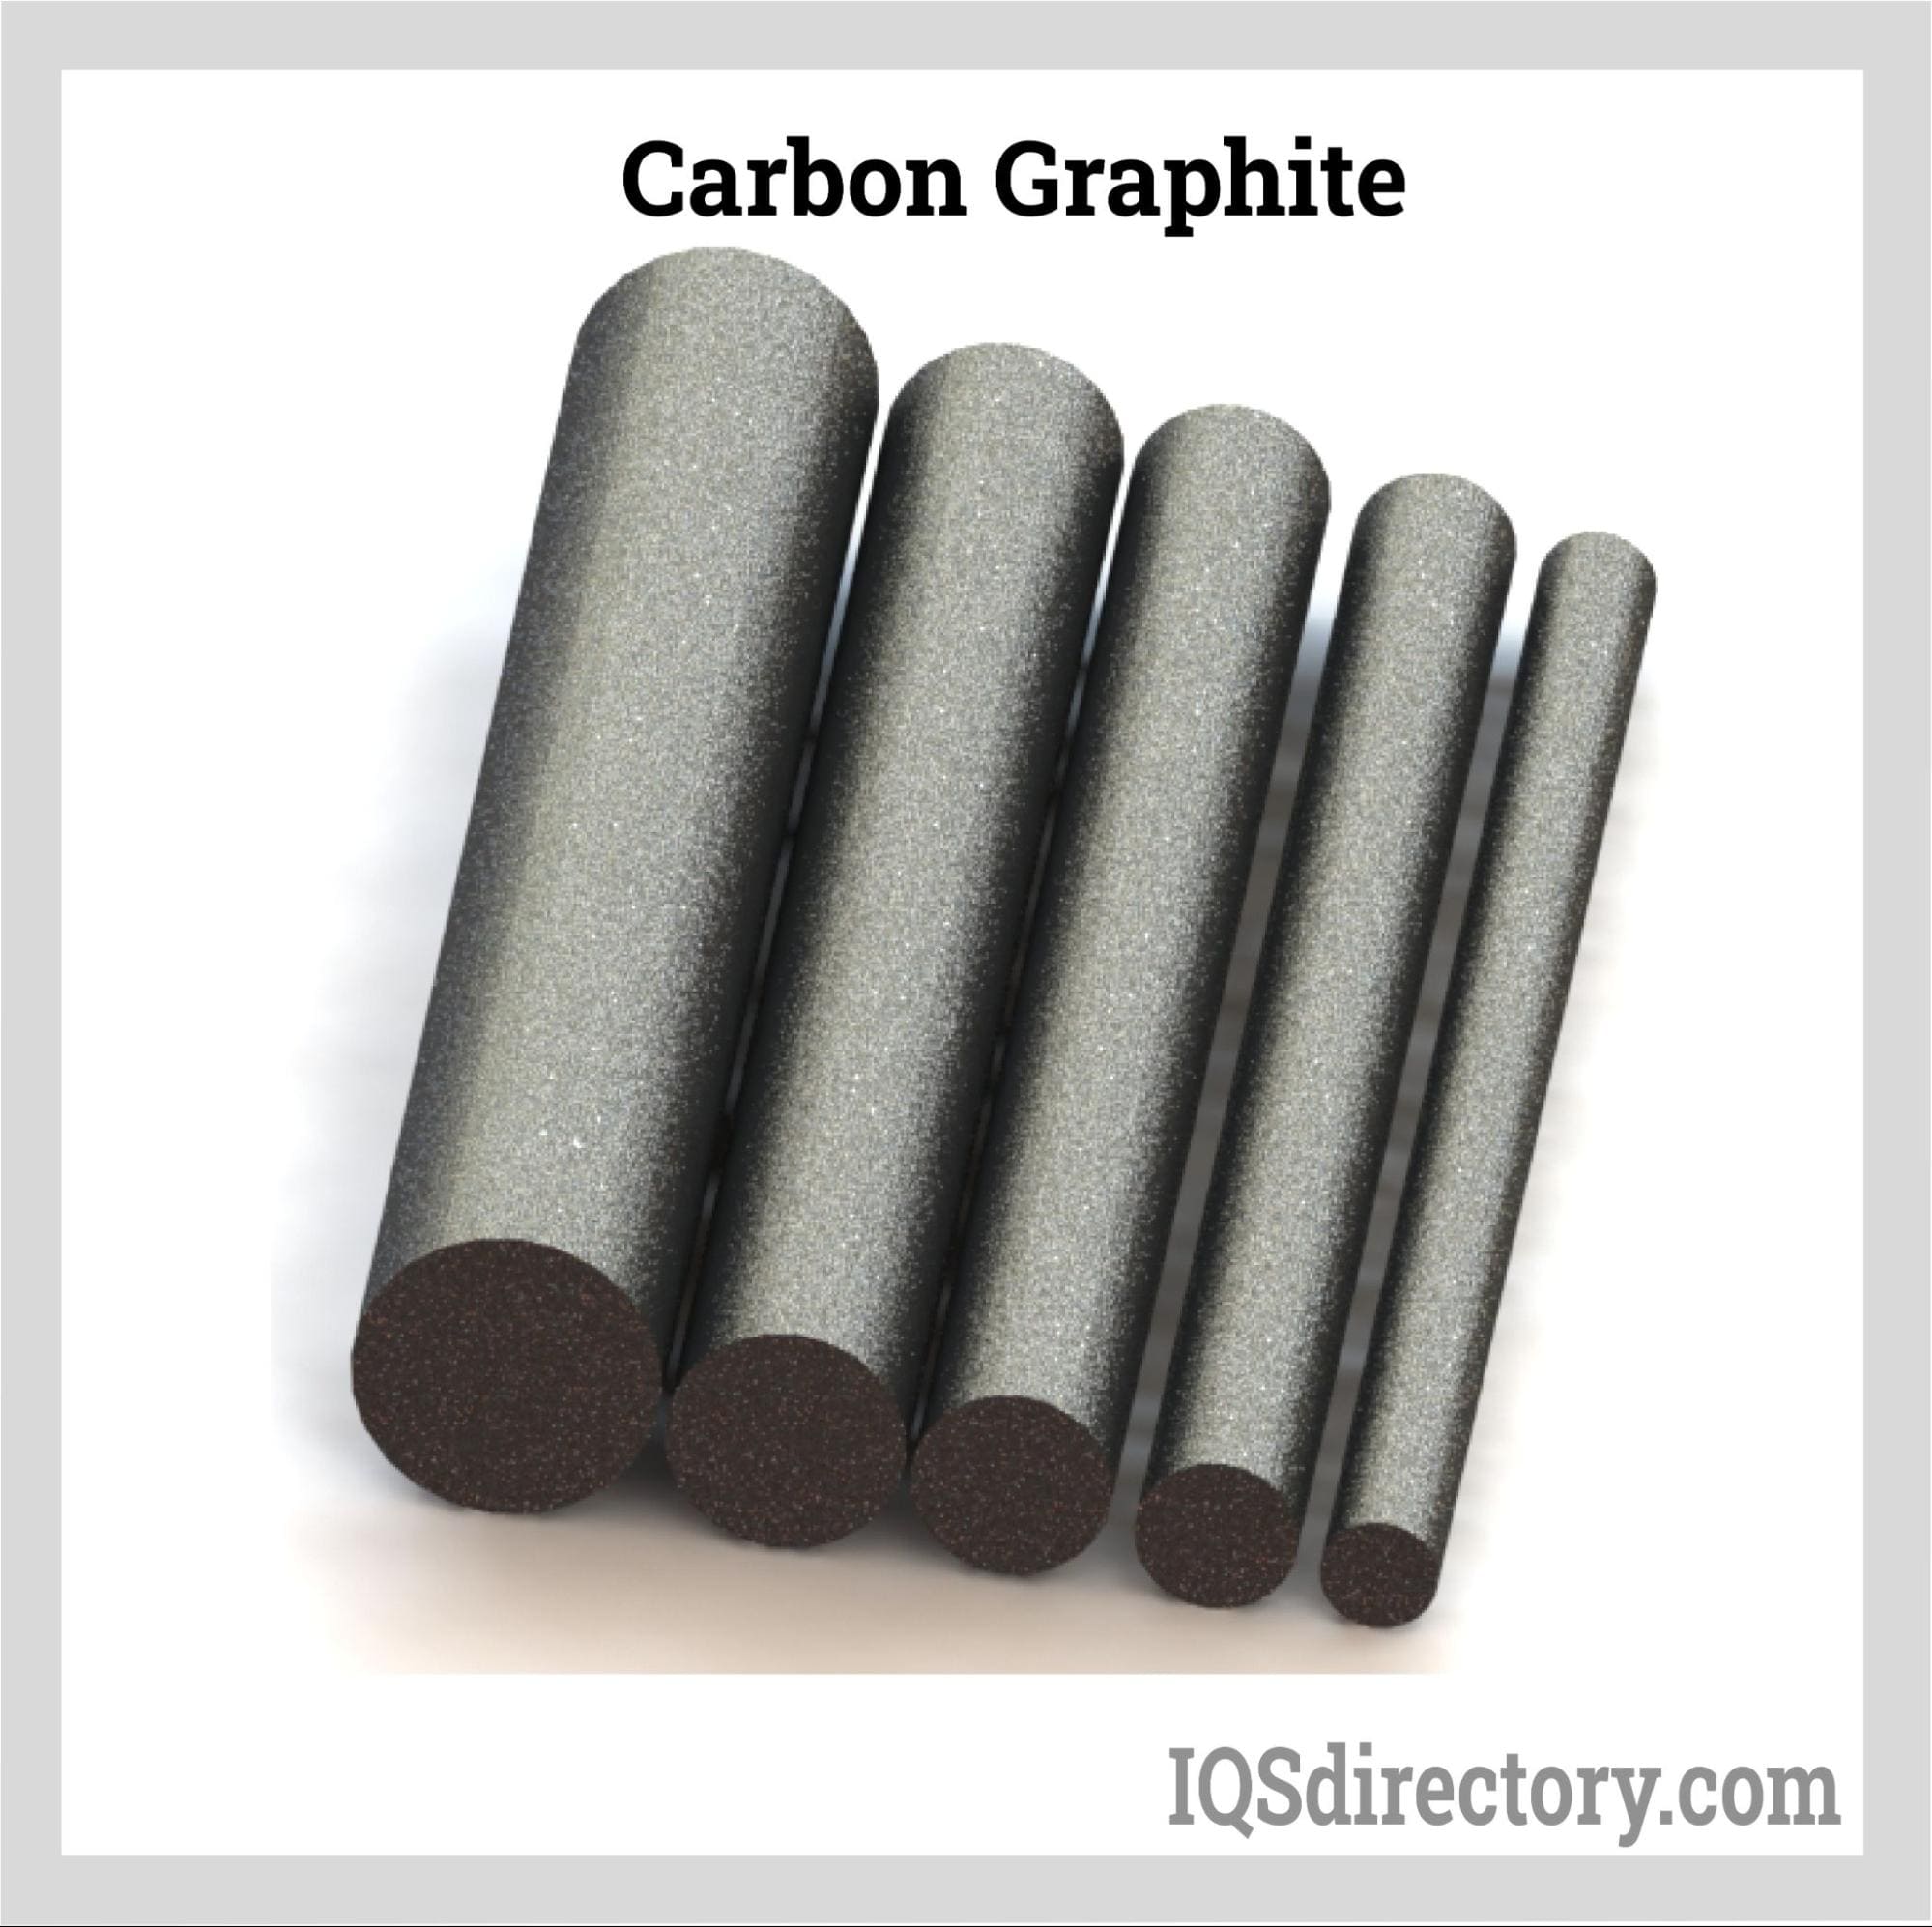 Carbon Graphite